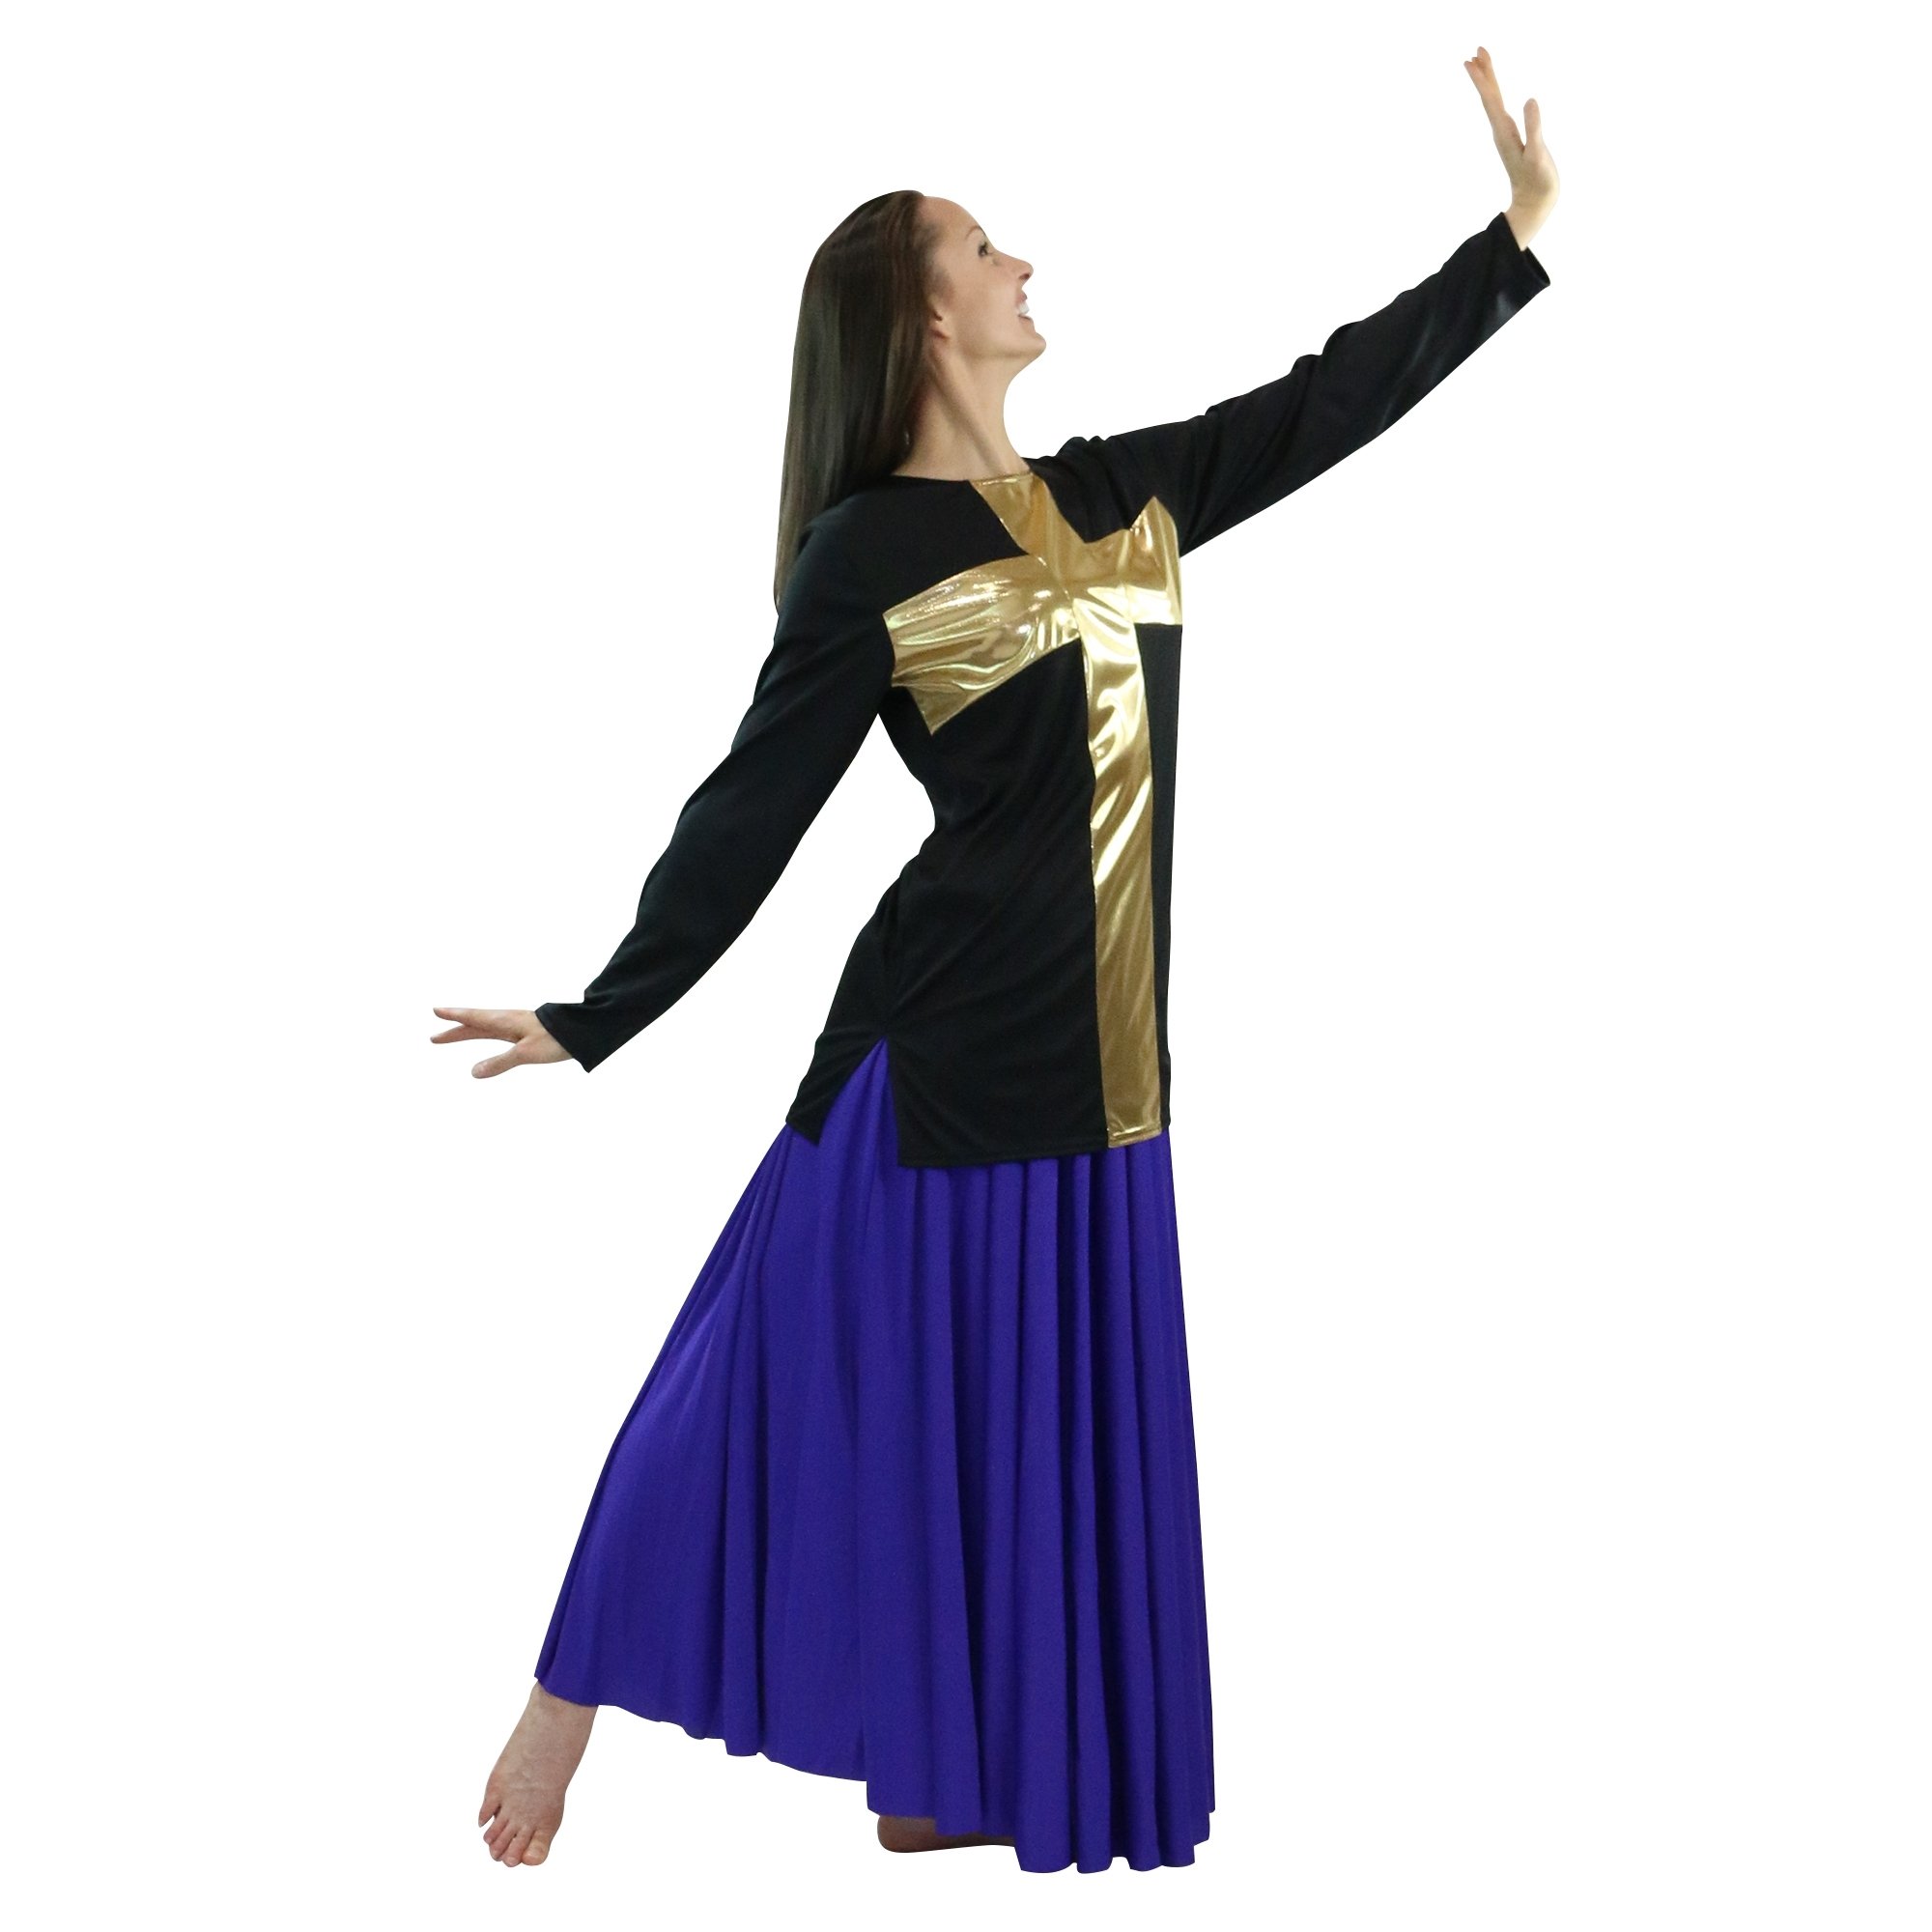 Danzcue Woman Praise Cross Inspired Pullover